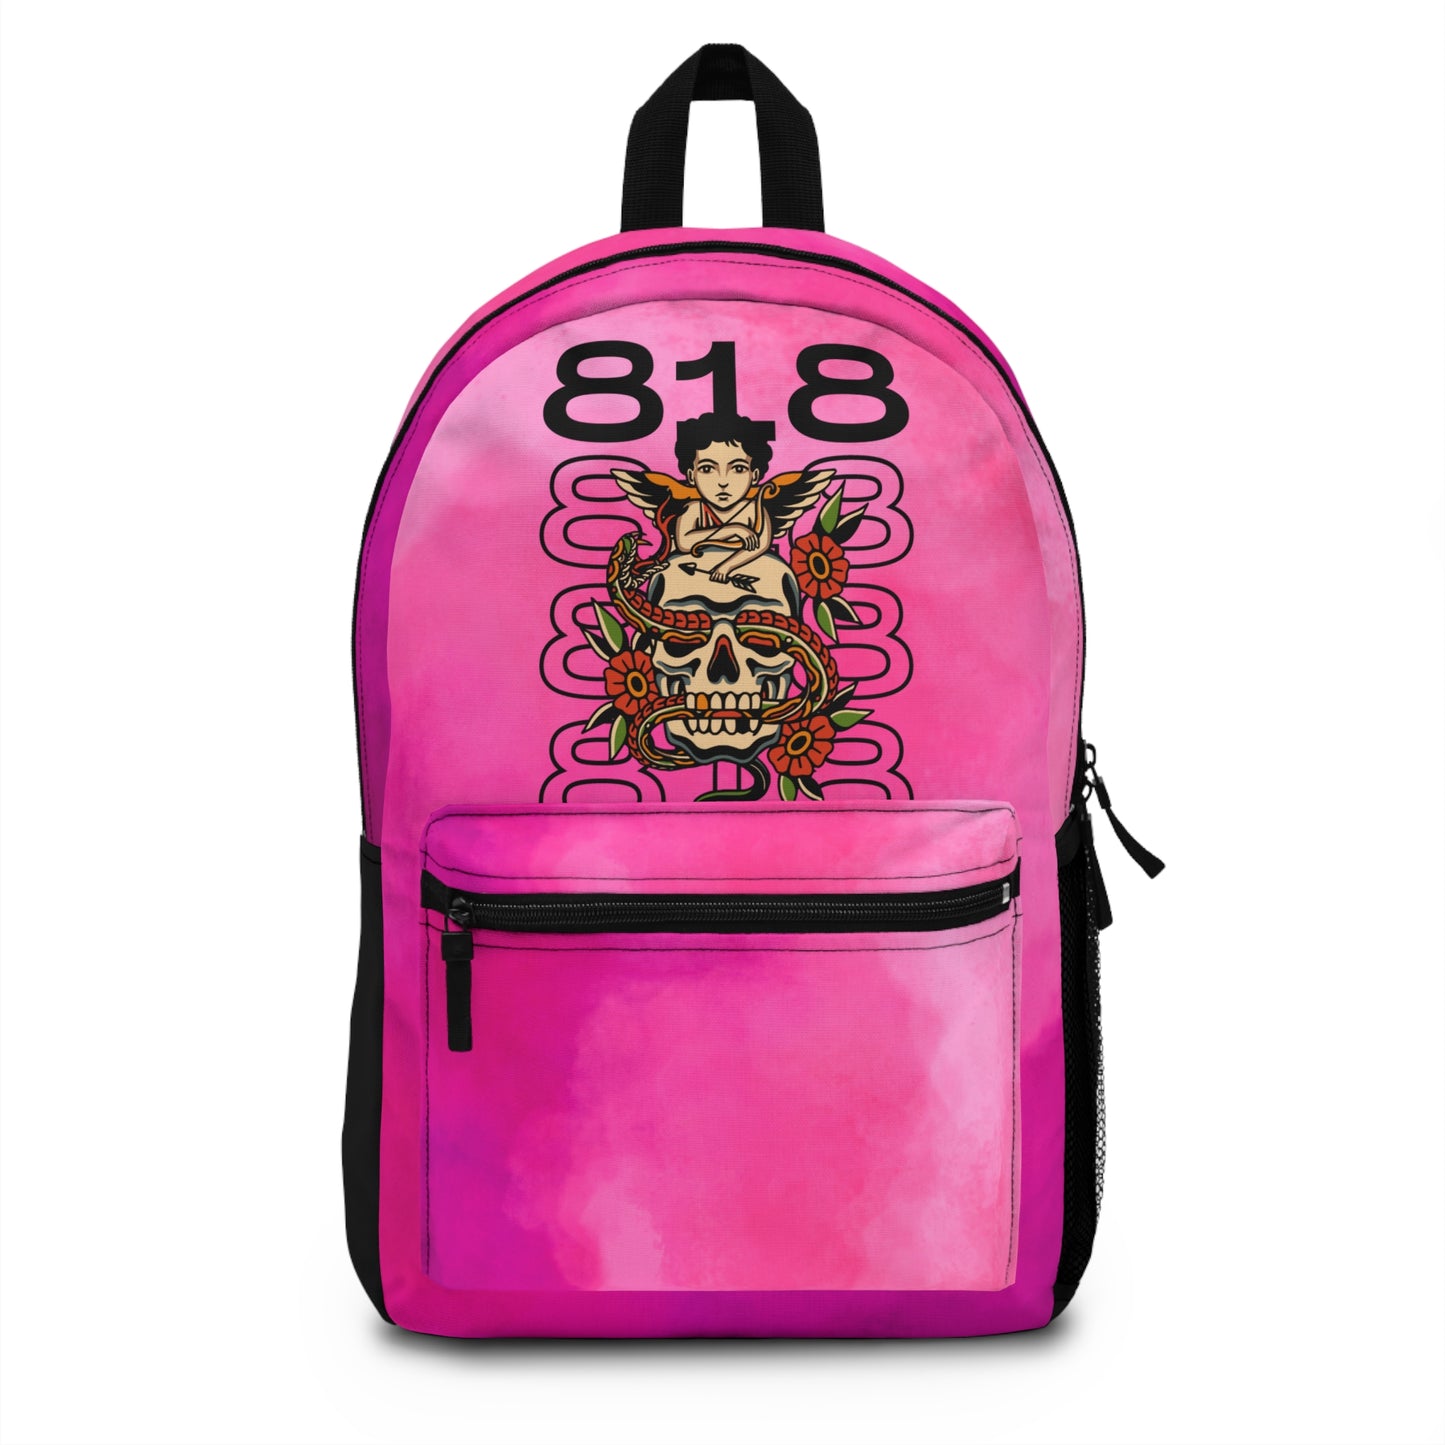 818 Backpack- Backpack San Fernando